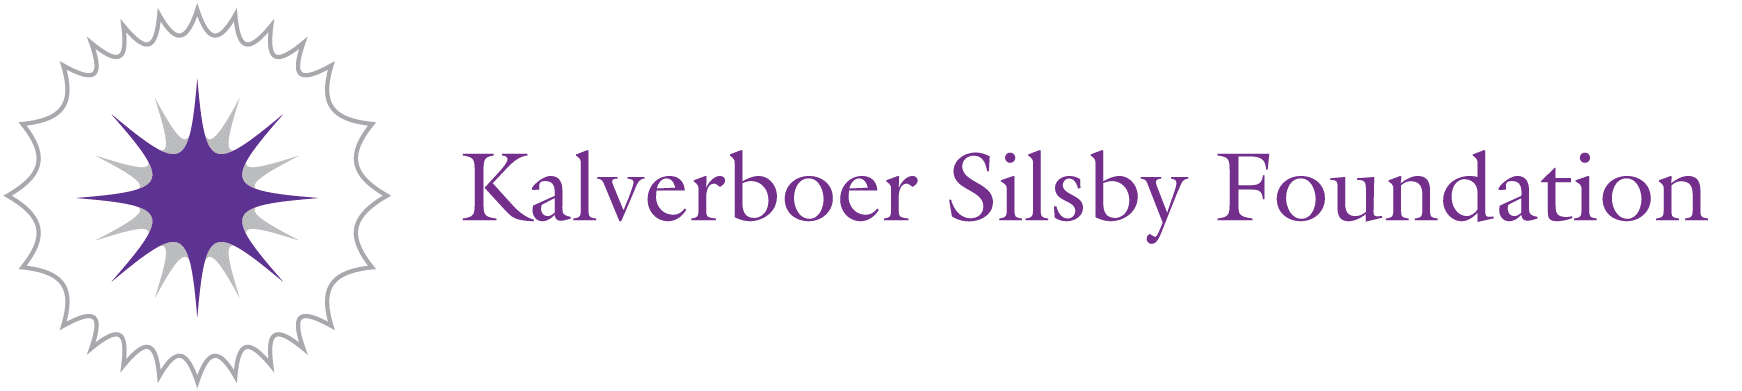 Kalverboer Silsby Foundation